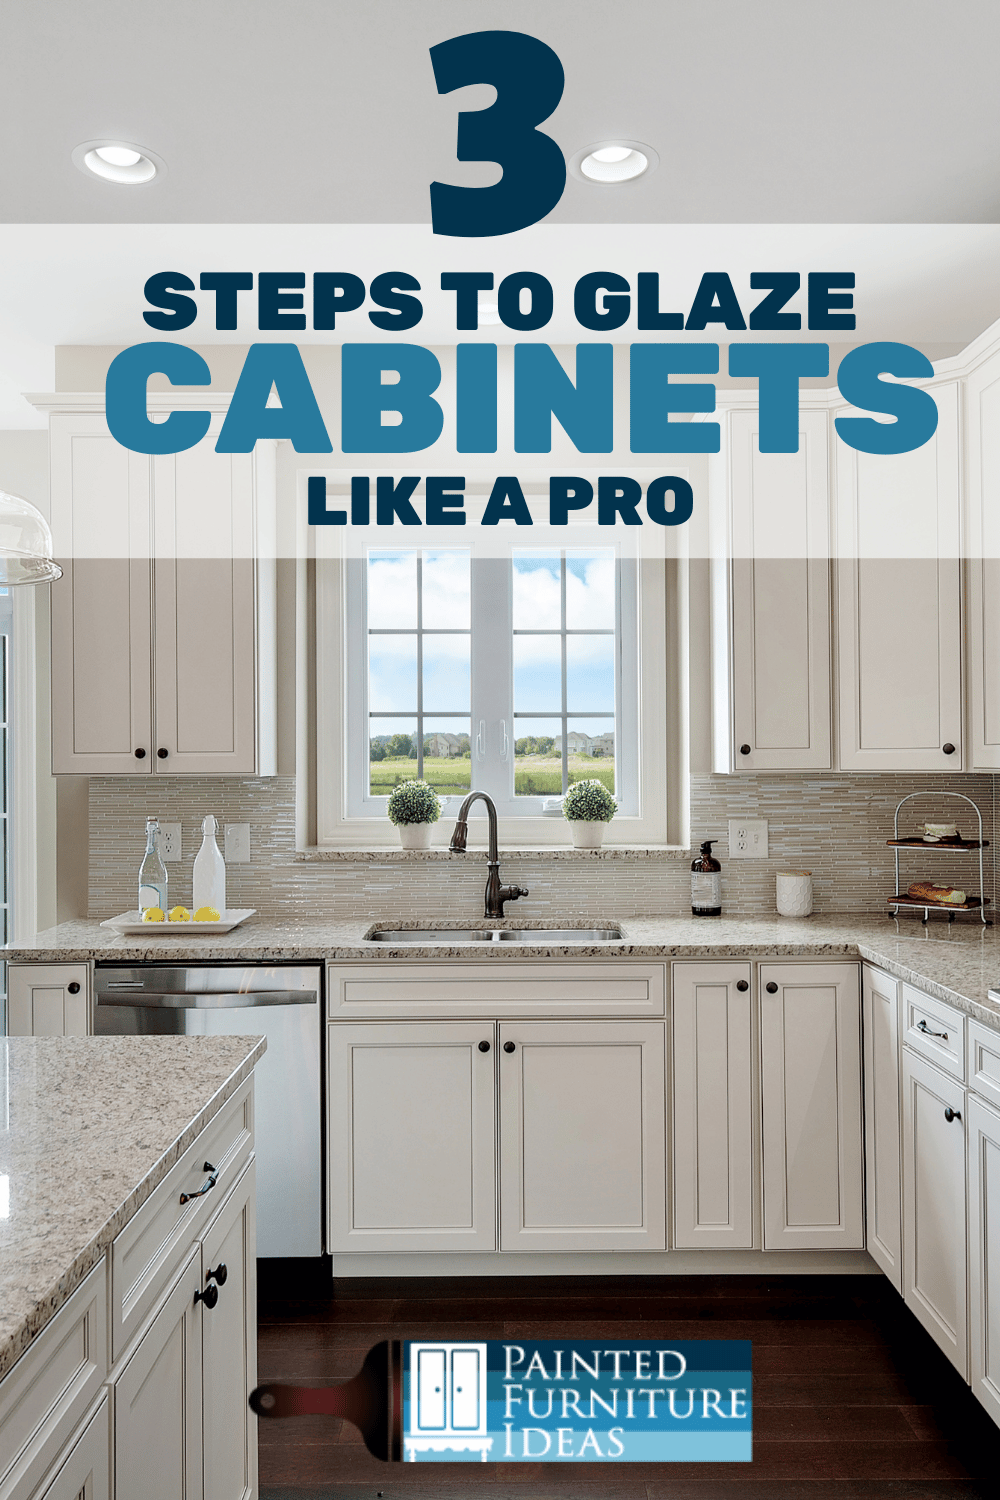 3 Steps To Glaze Cabinets Correctly